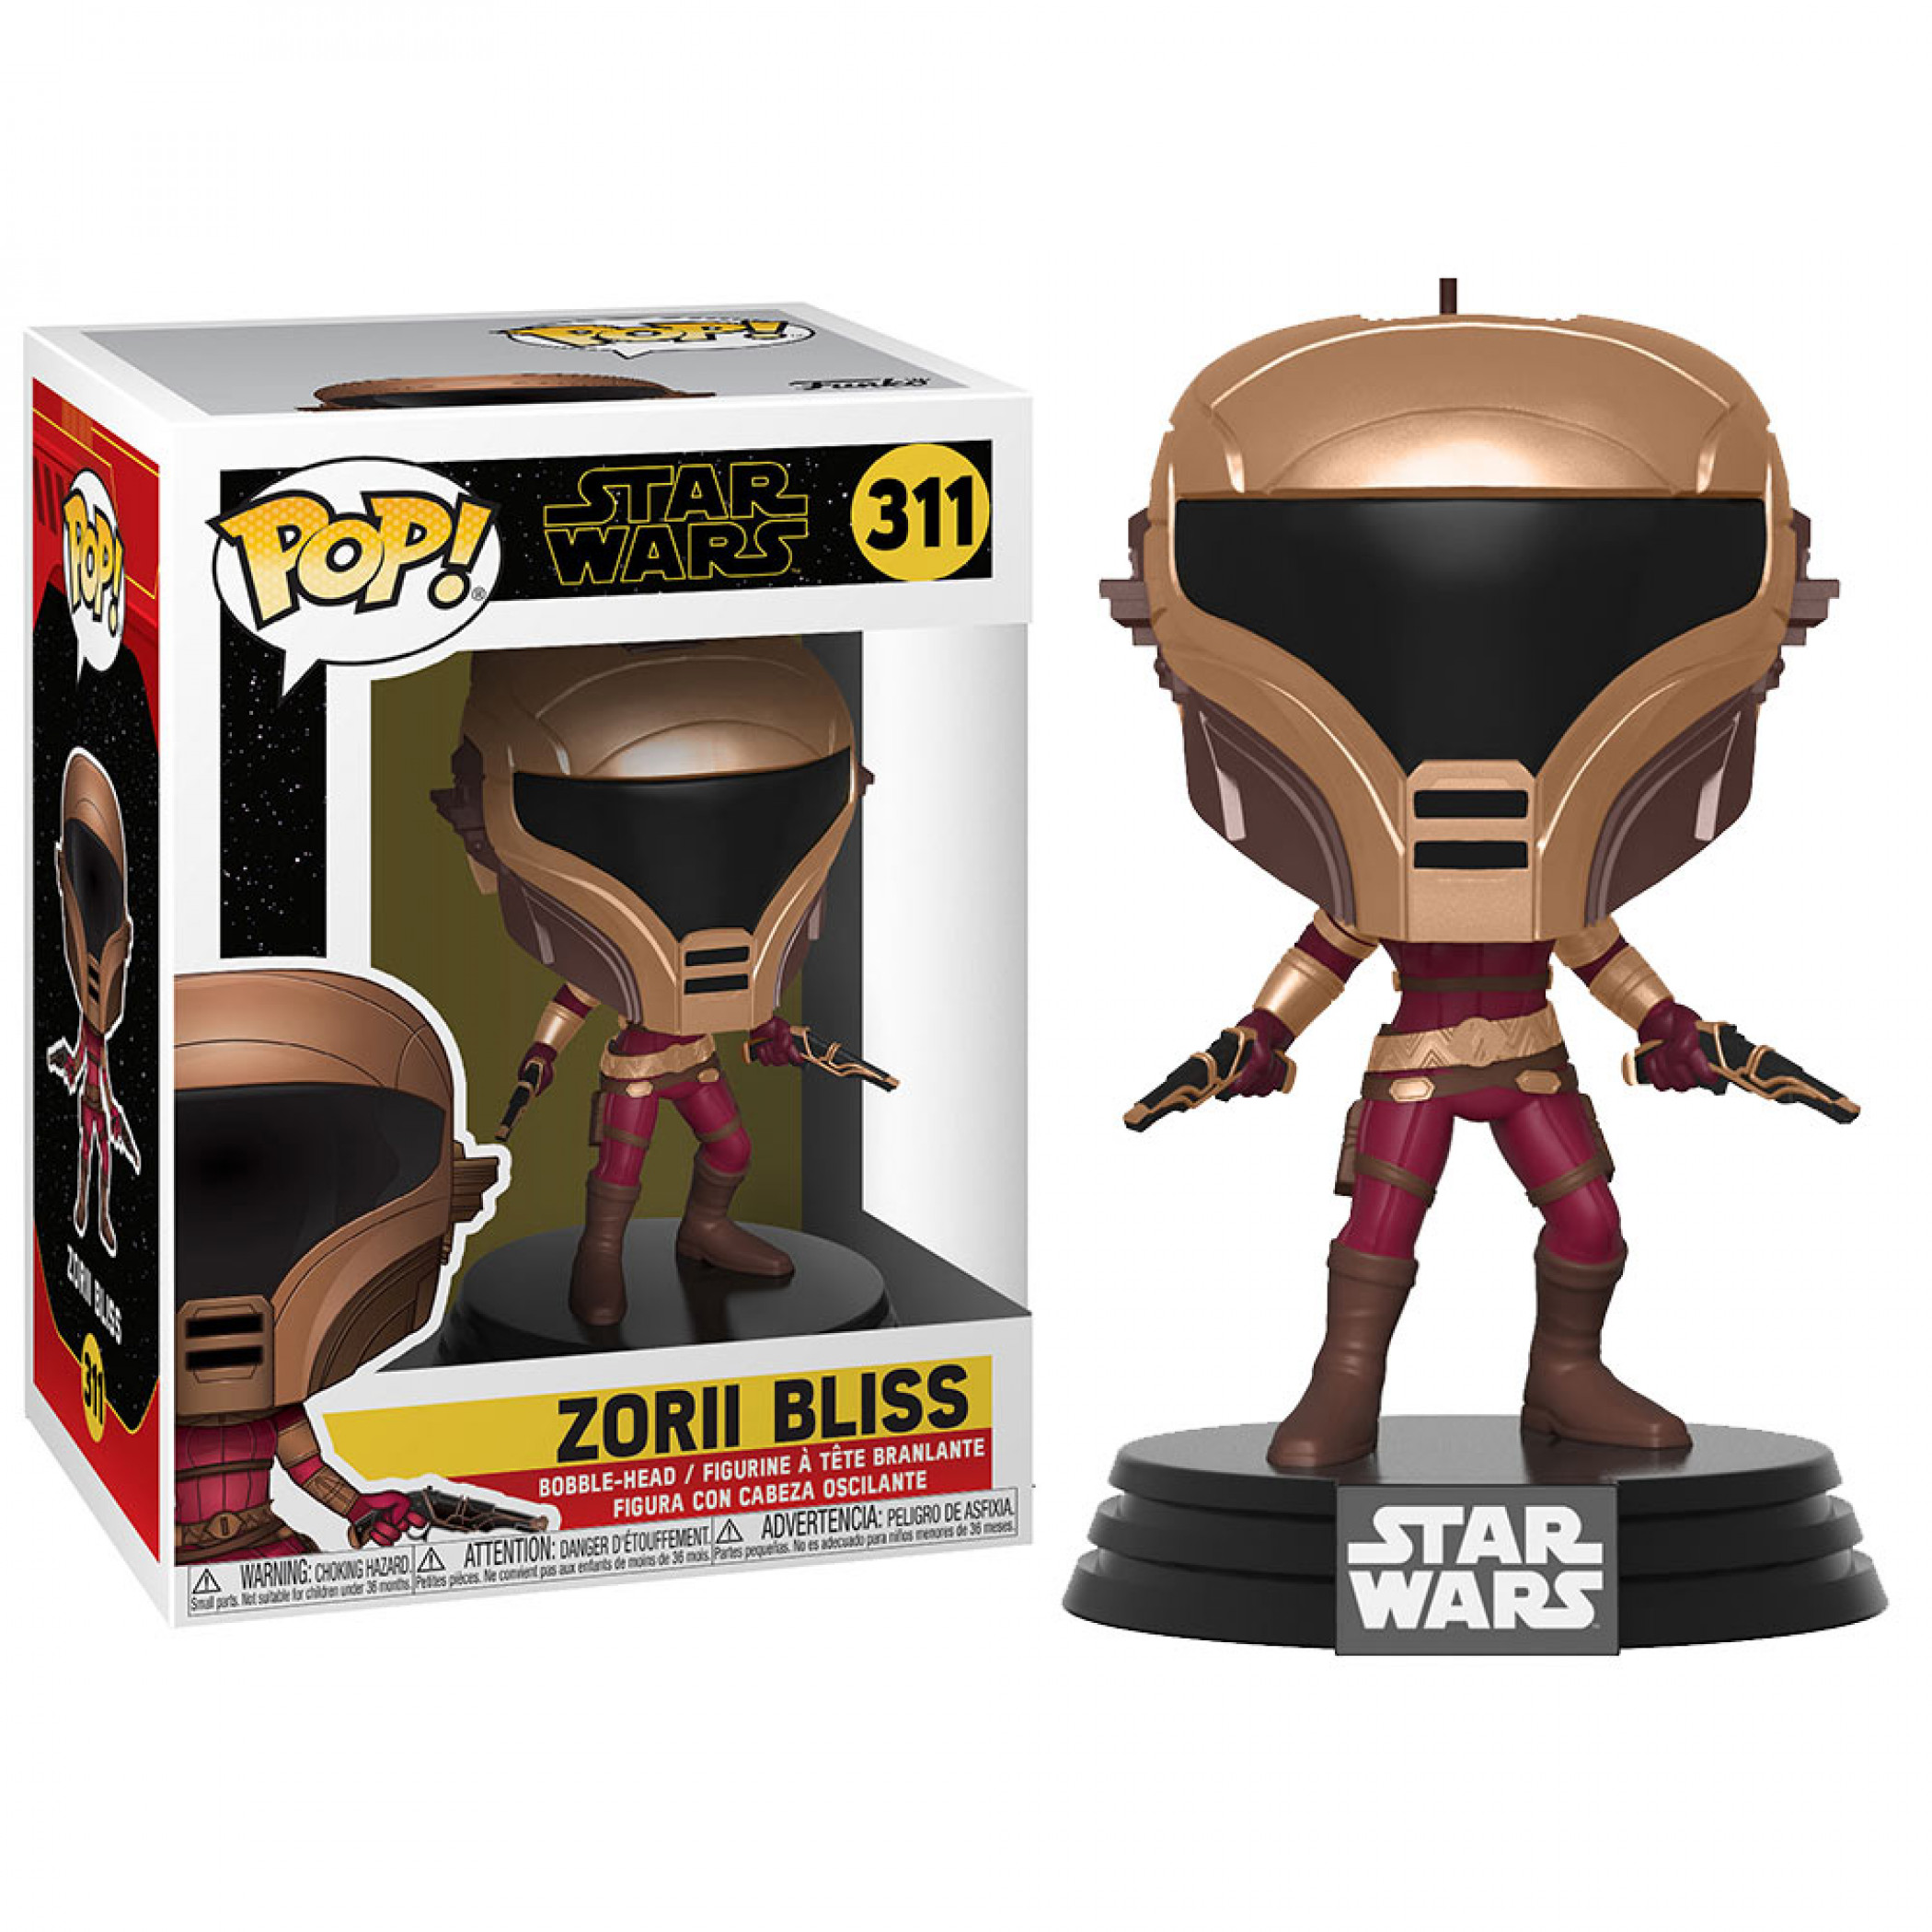 Zorii Bliss - Star Wars: The Rise of Skywalker Pop!